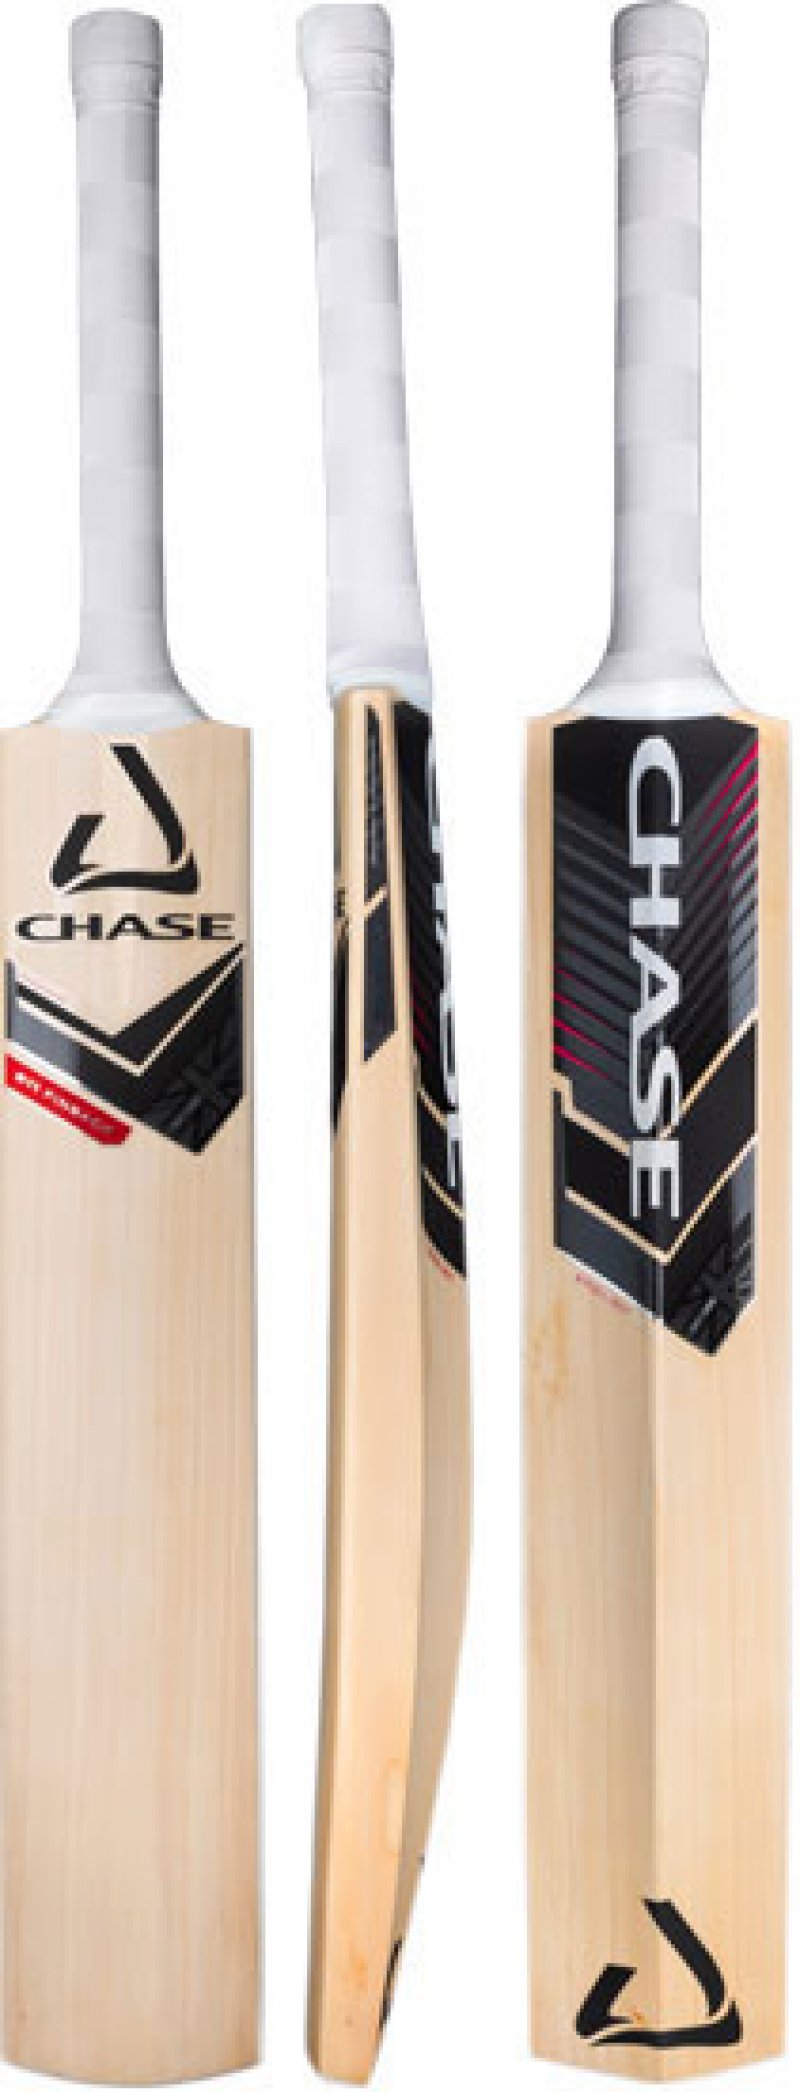 Chase Finback R4 Cricket Bat